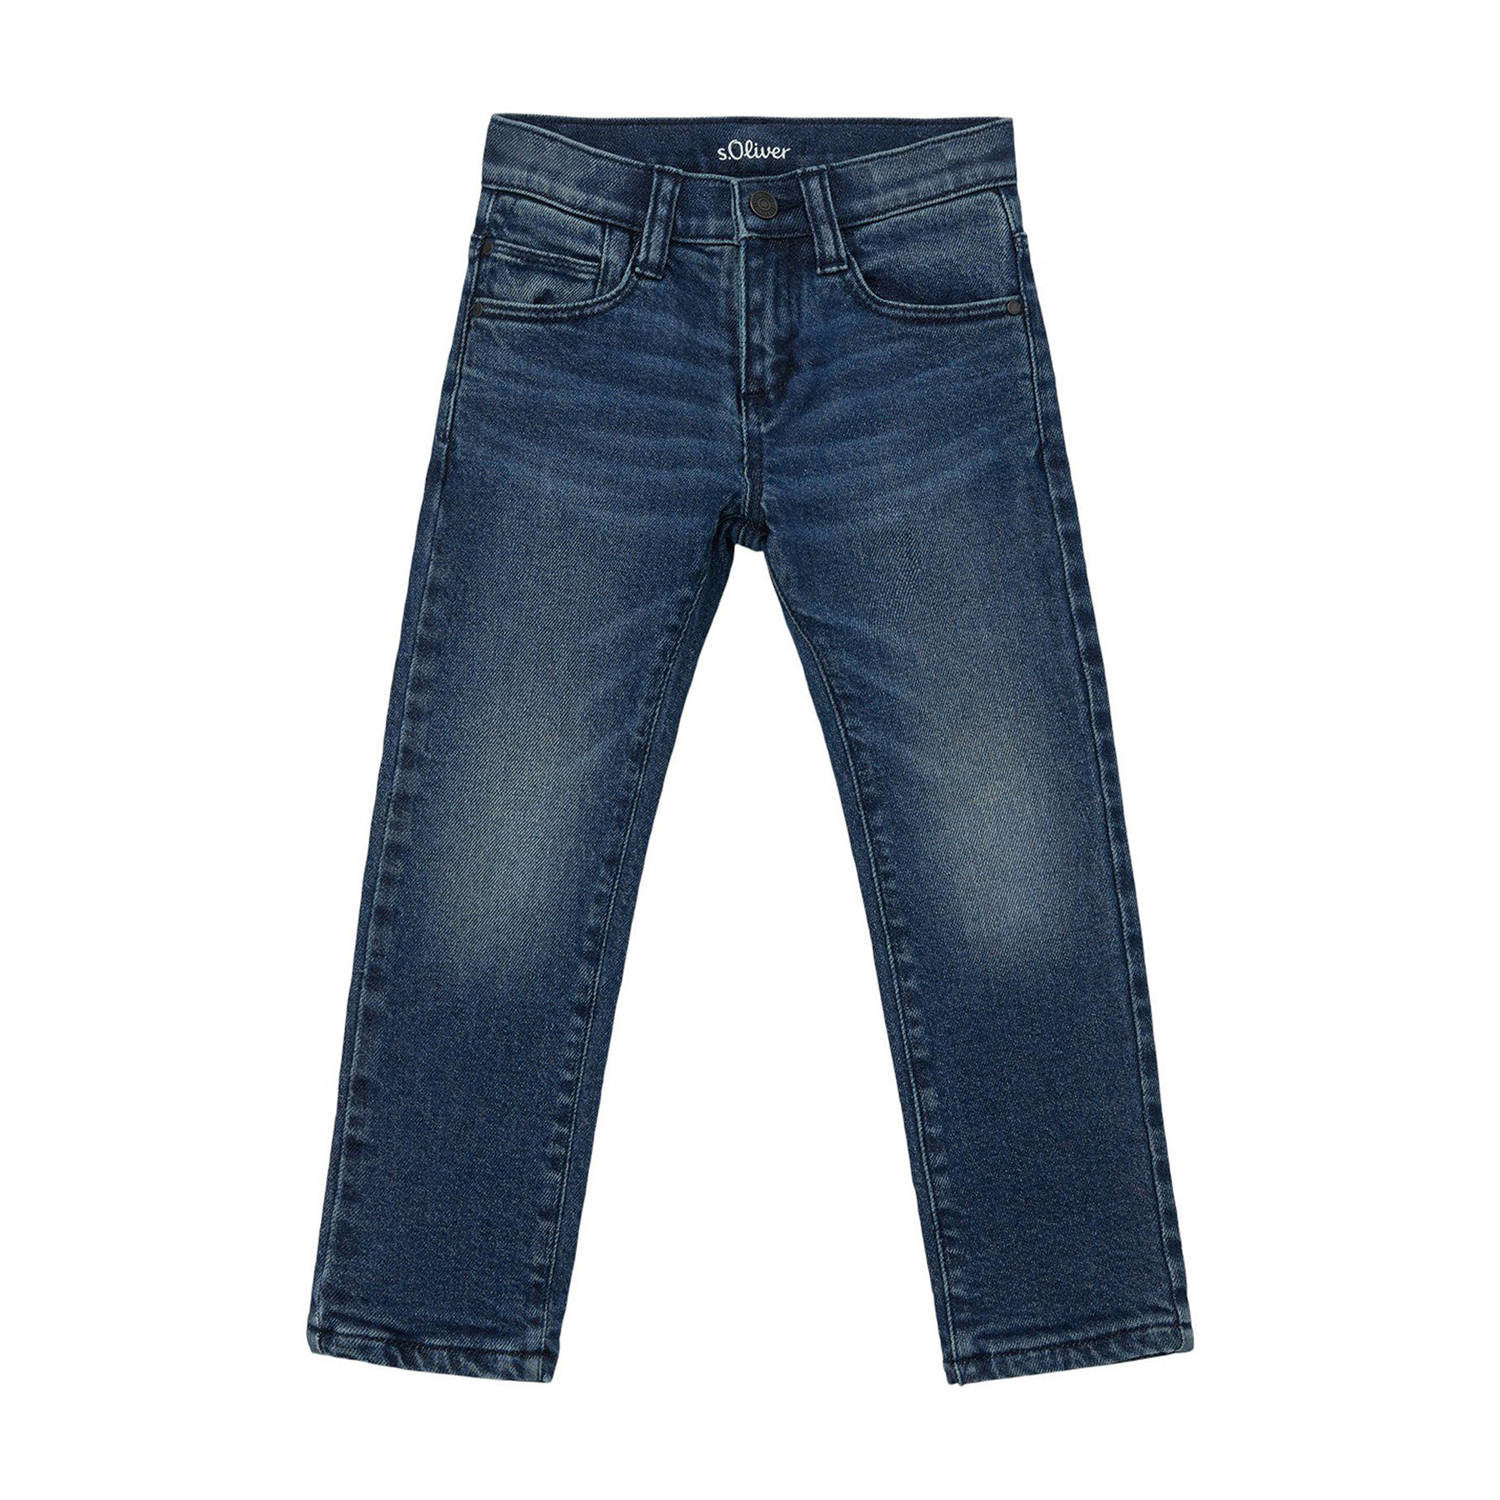 s.Oliver straight fit jeans dark blue denim